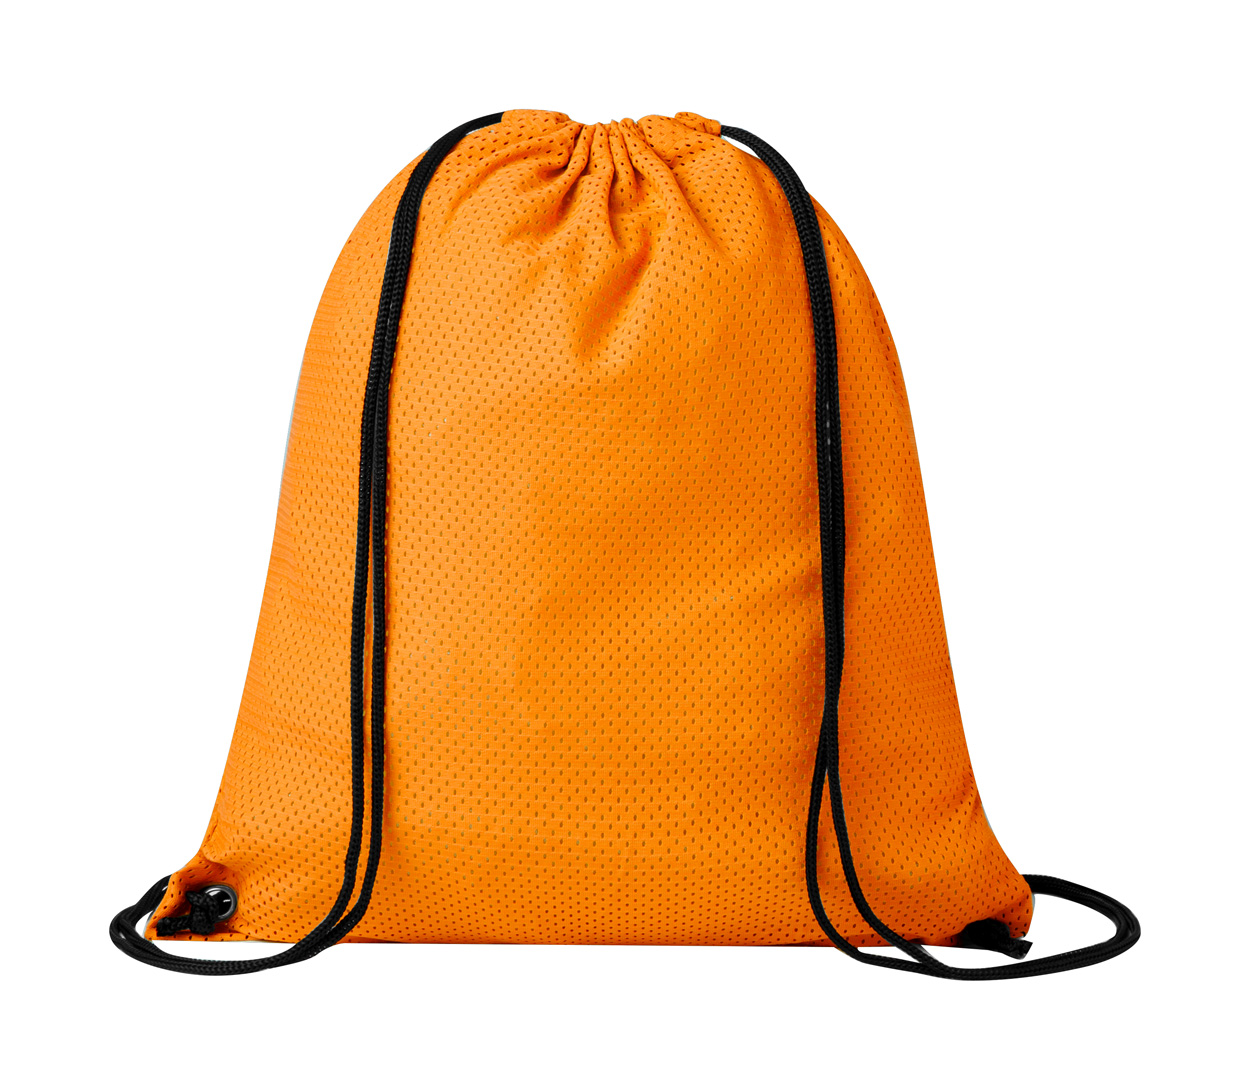 Arlequix download bag - orange